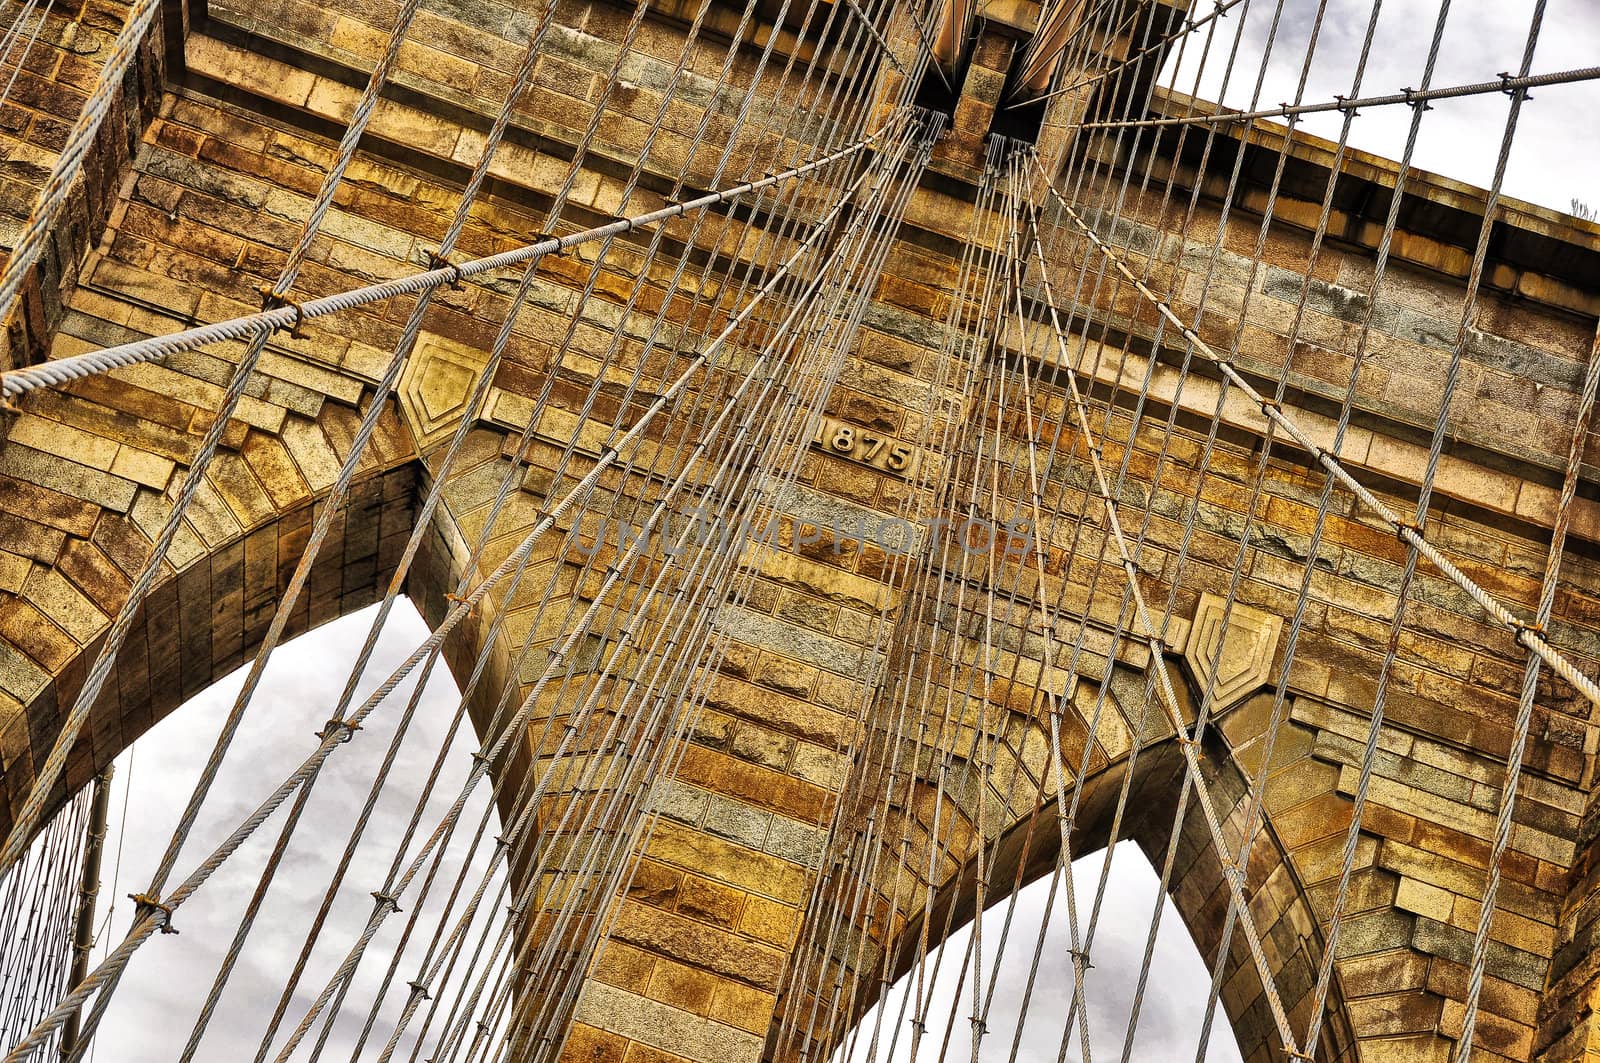 Brooklyn bridge detail, New York, USA by martinm303